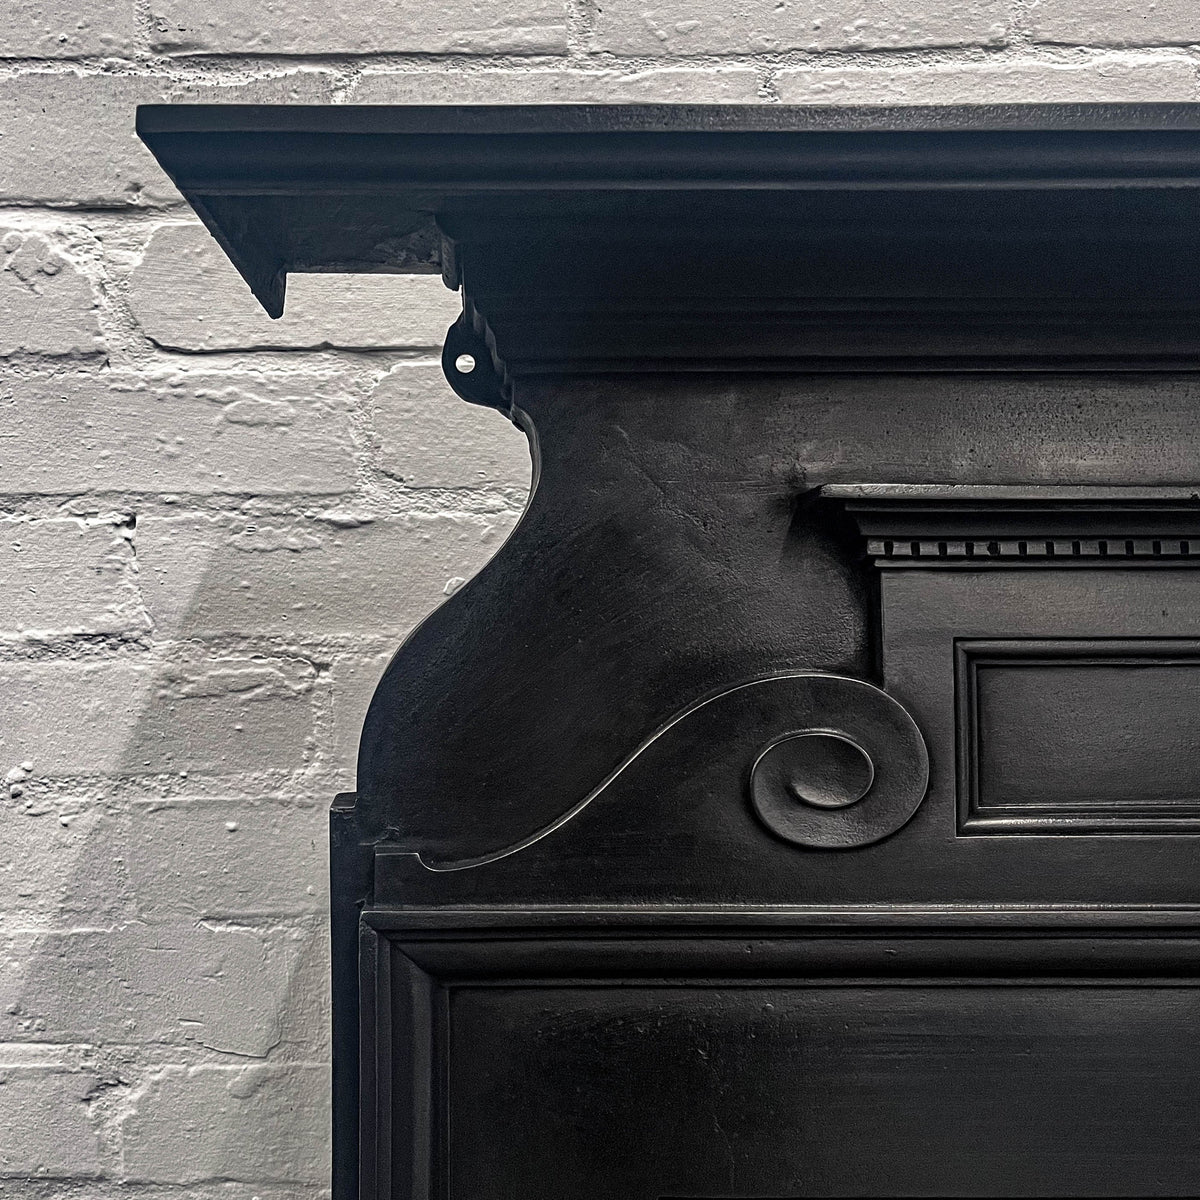 Antique Edwardian Cast Iron Combination Fireplace | The Architectural Forum